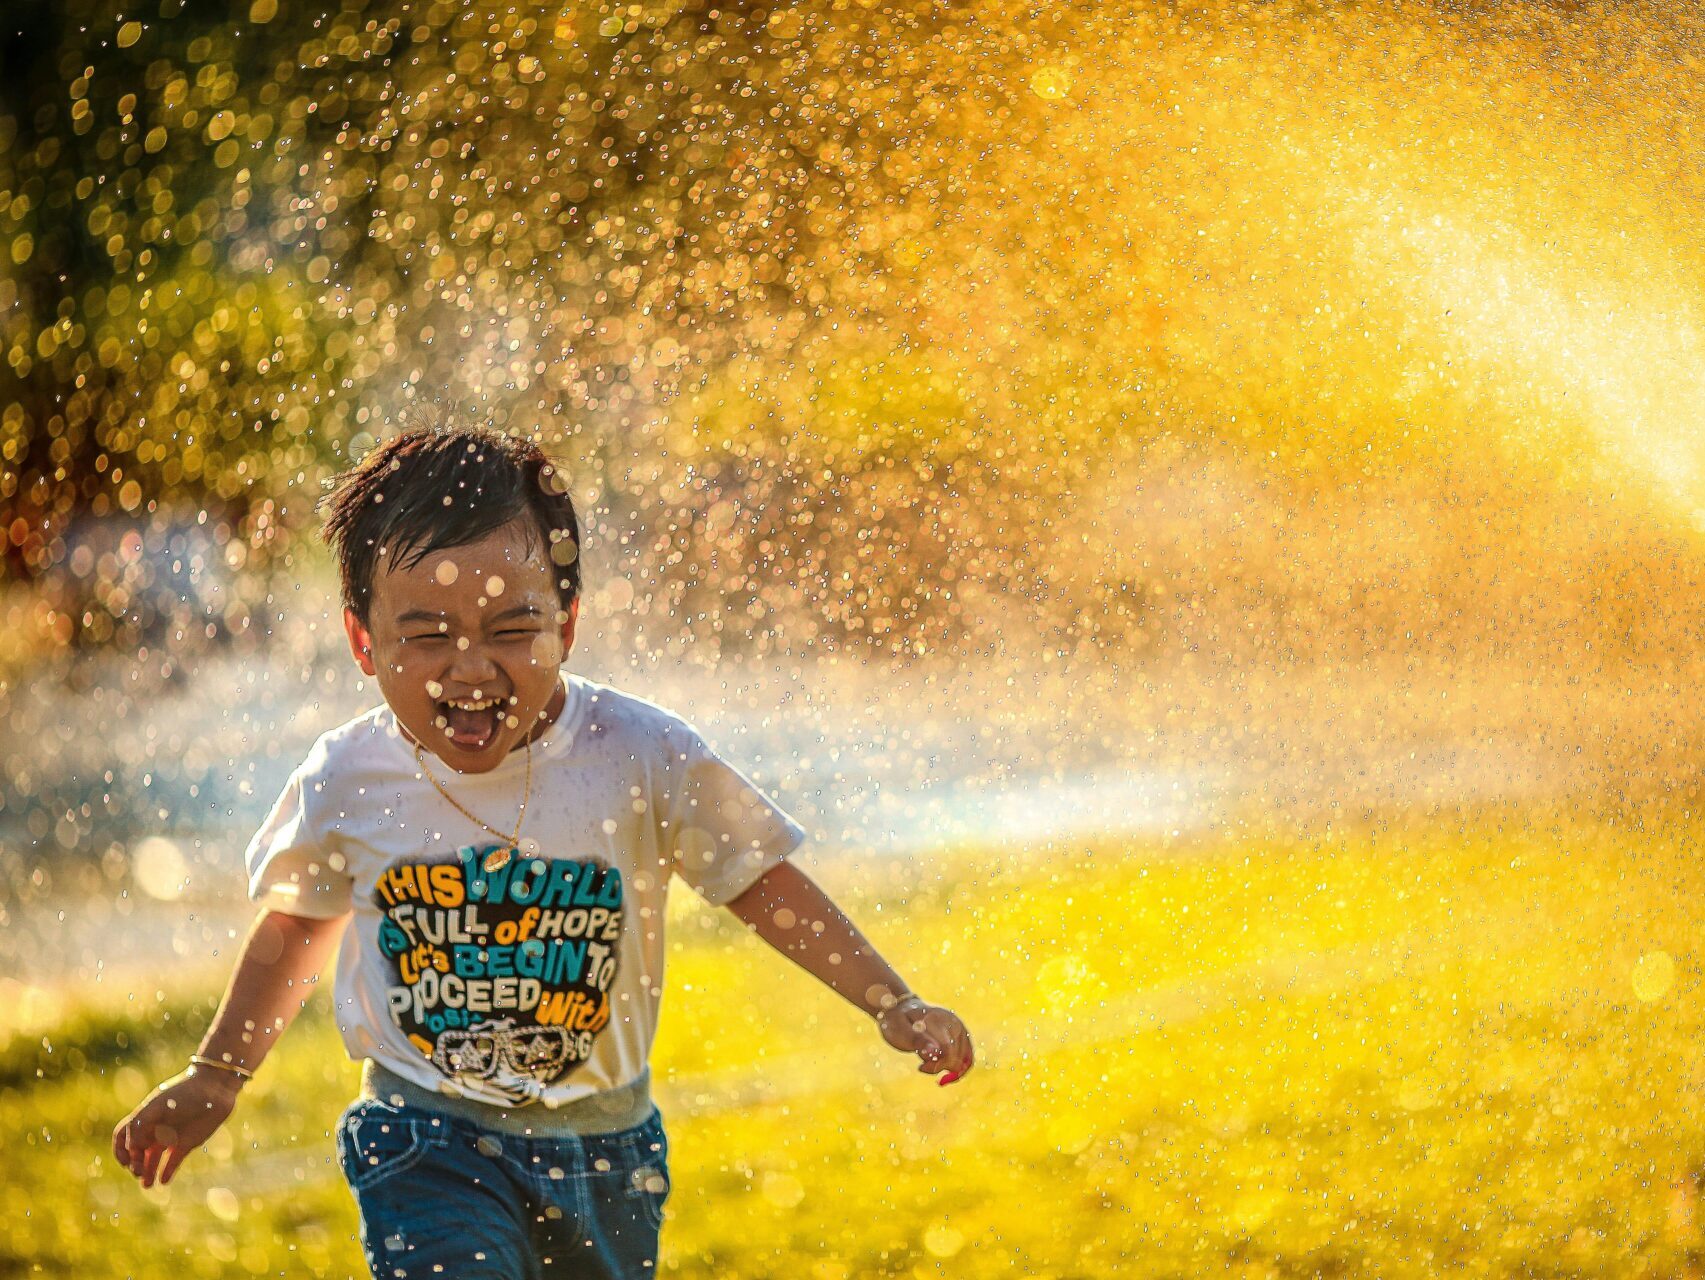 boy running through sprinkler in yard on grass, smiling